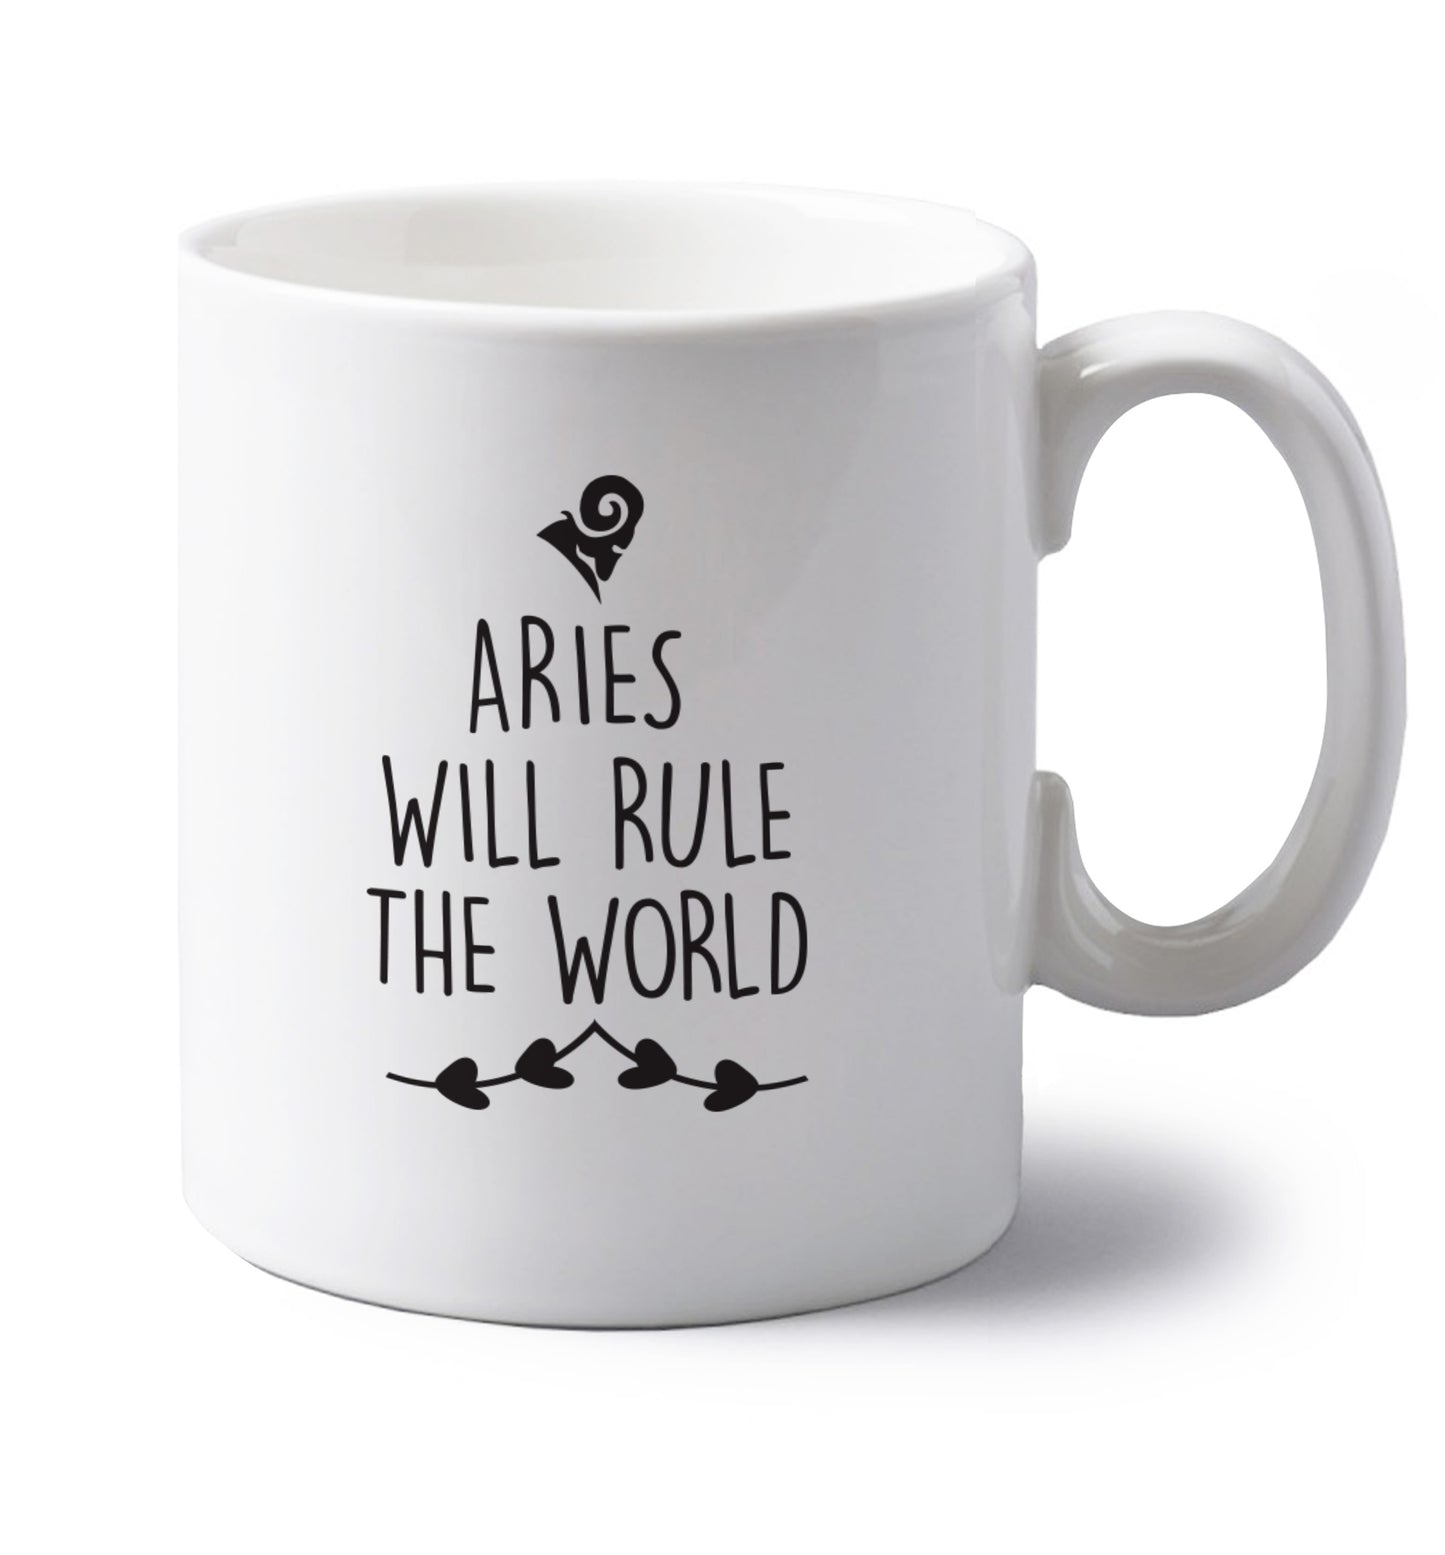 Aries will rule the world left handed white ceramic mug 